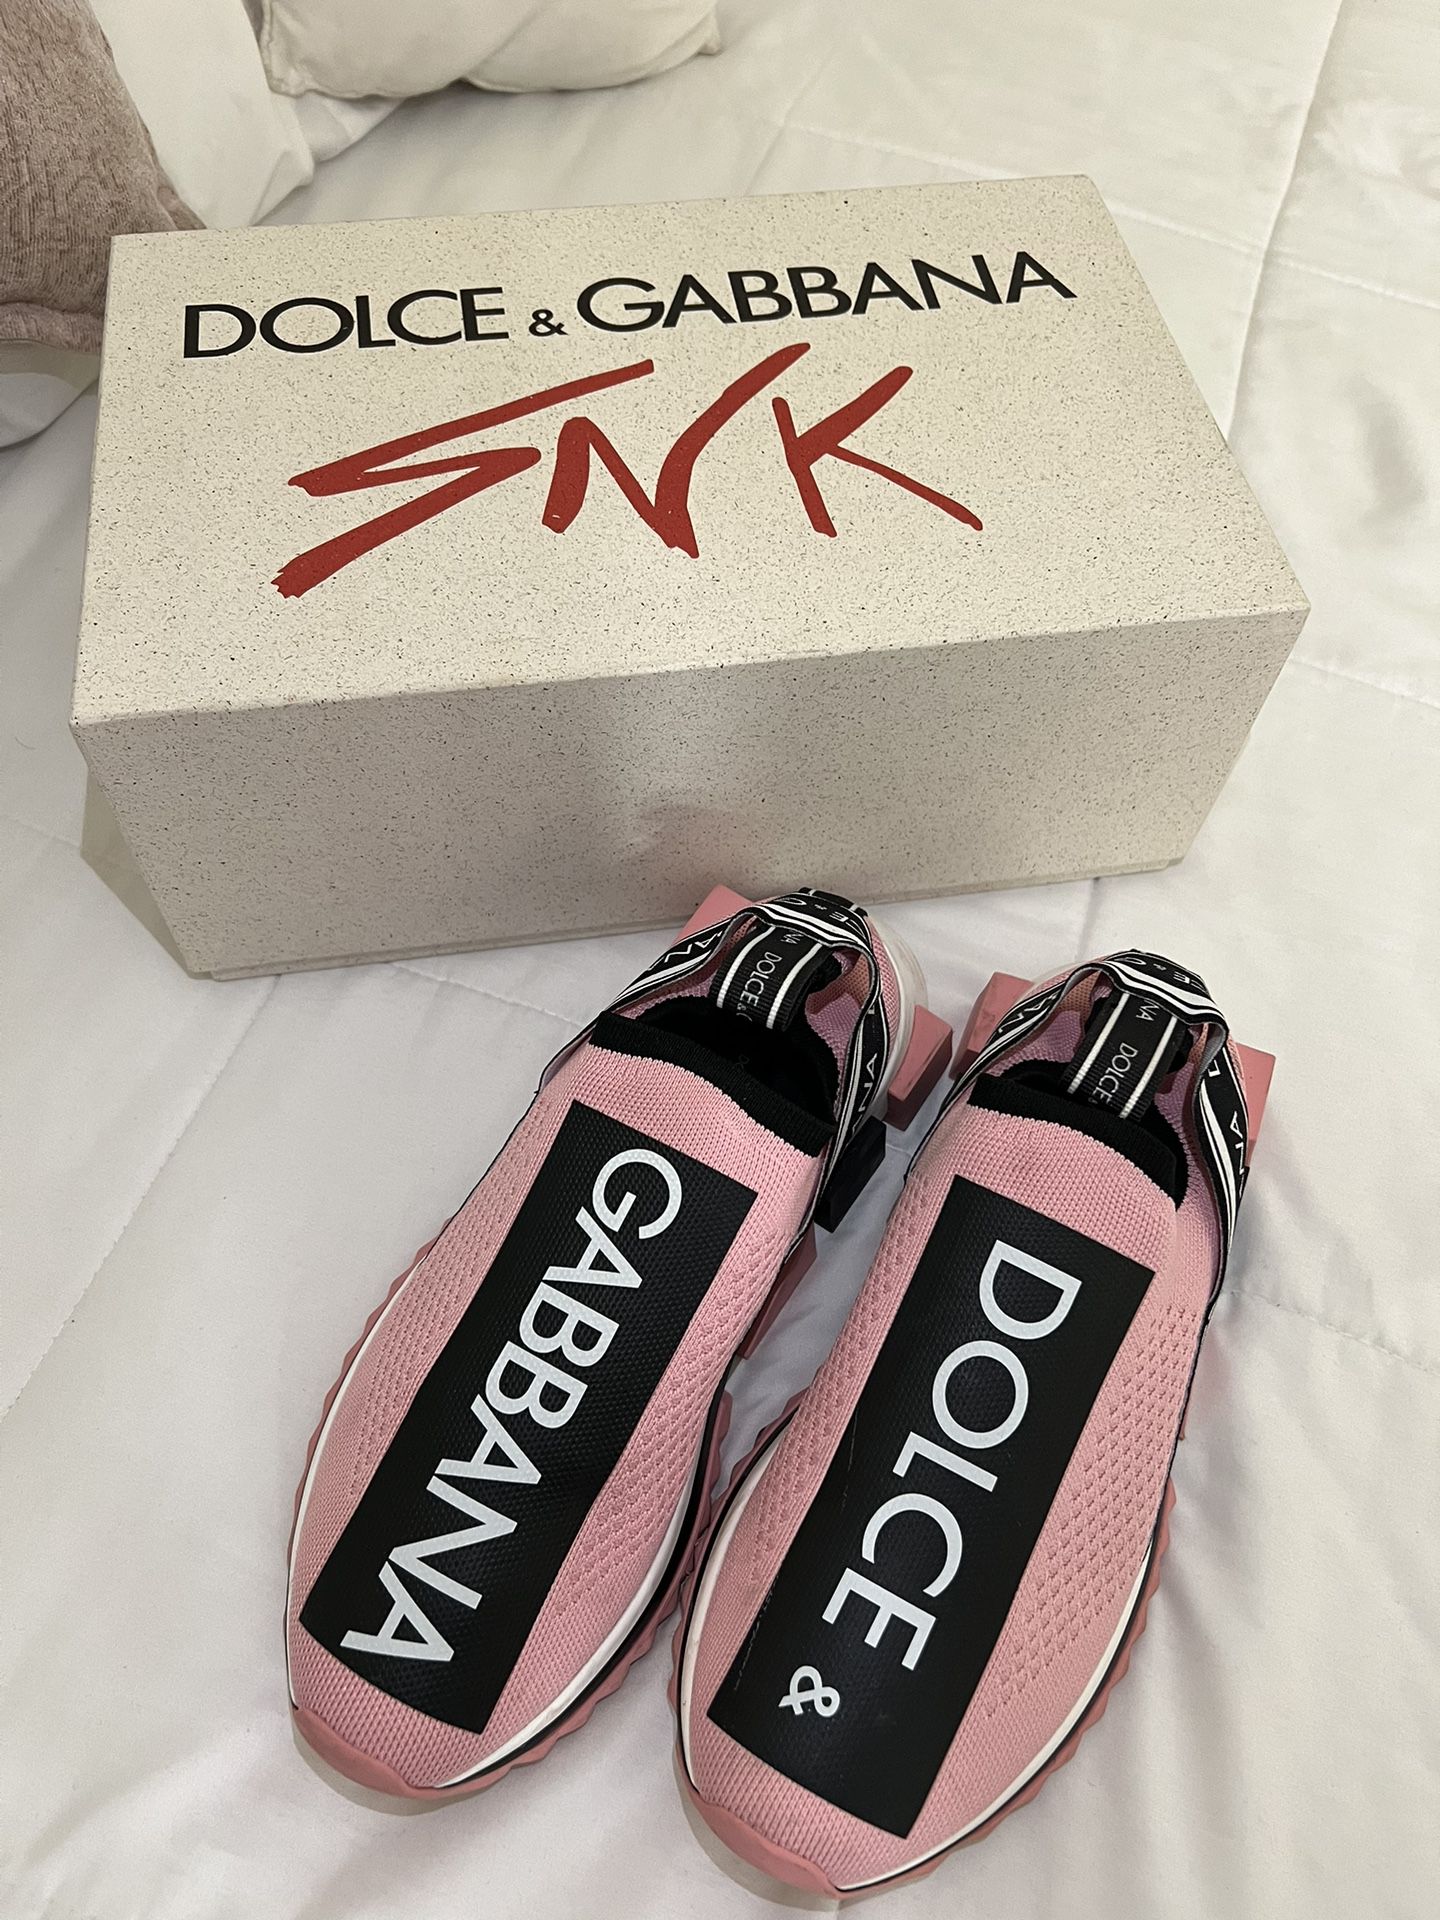 Dolce and Gabbana Original 